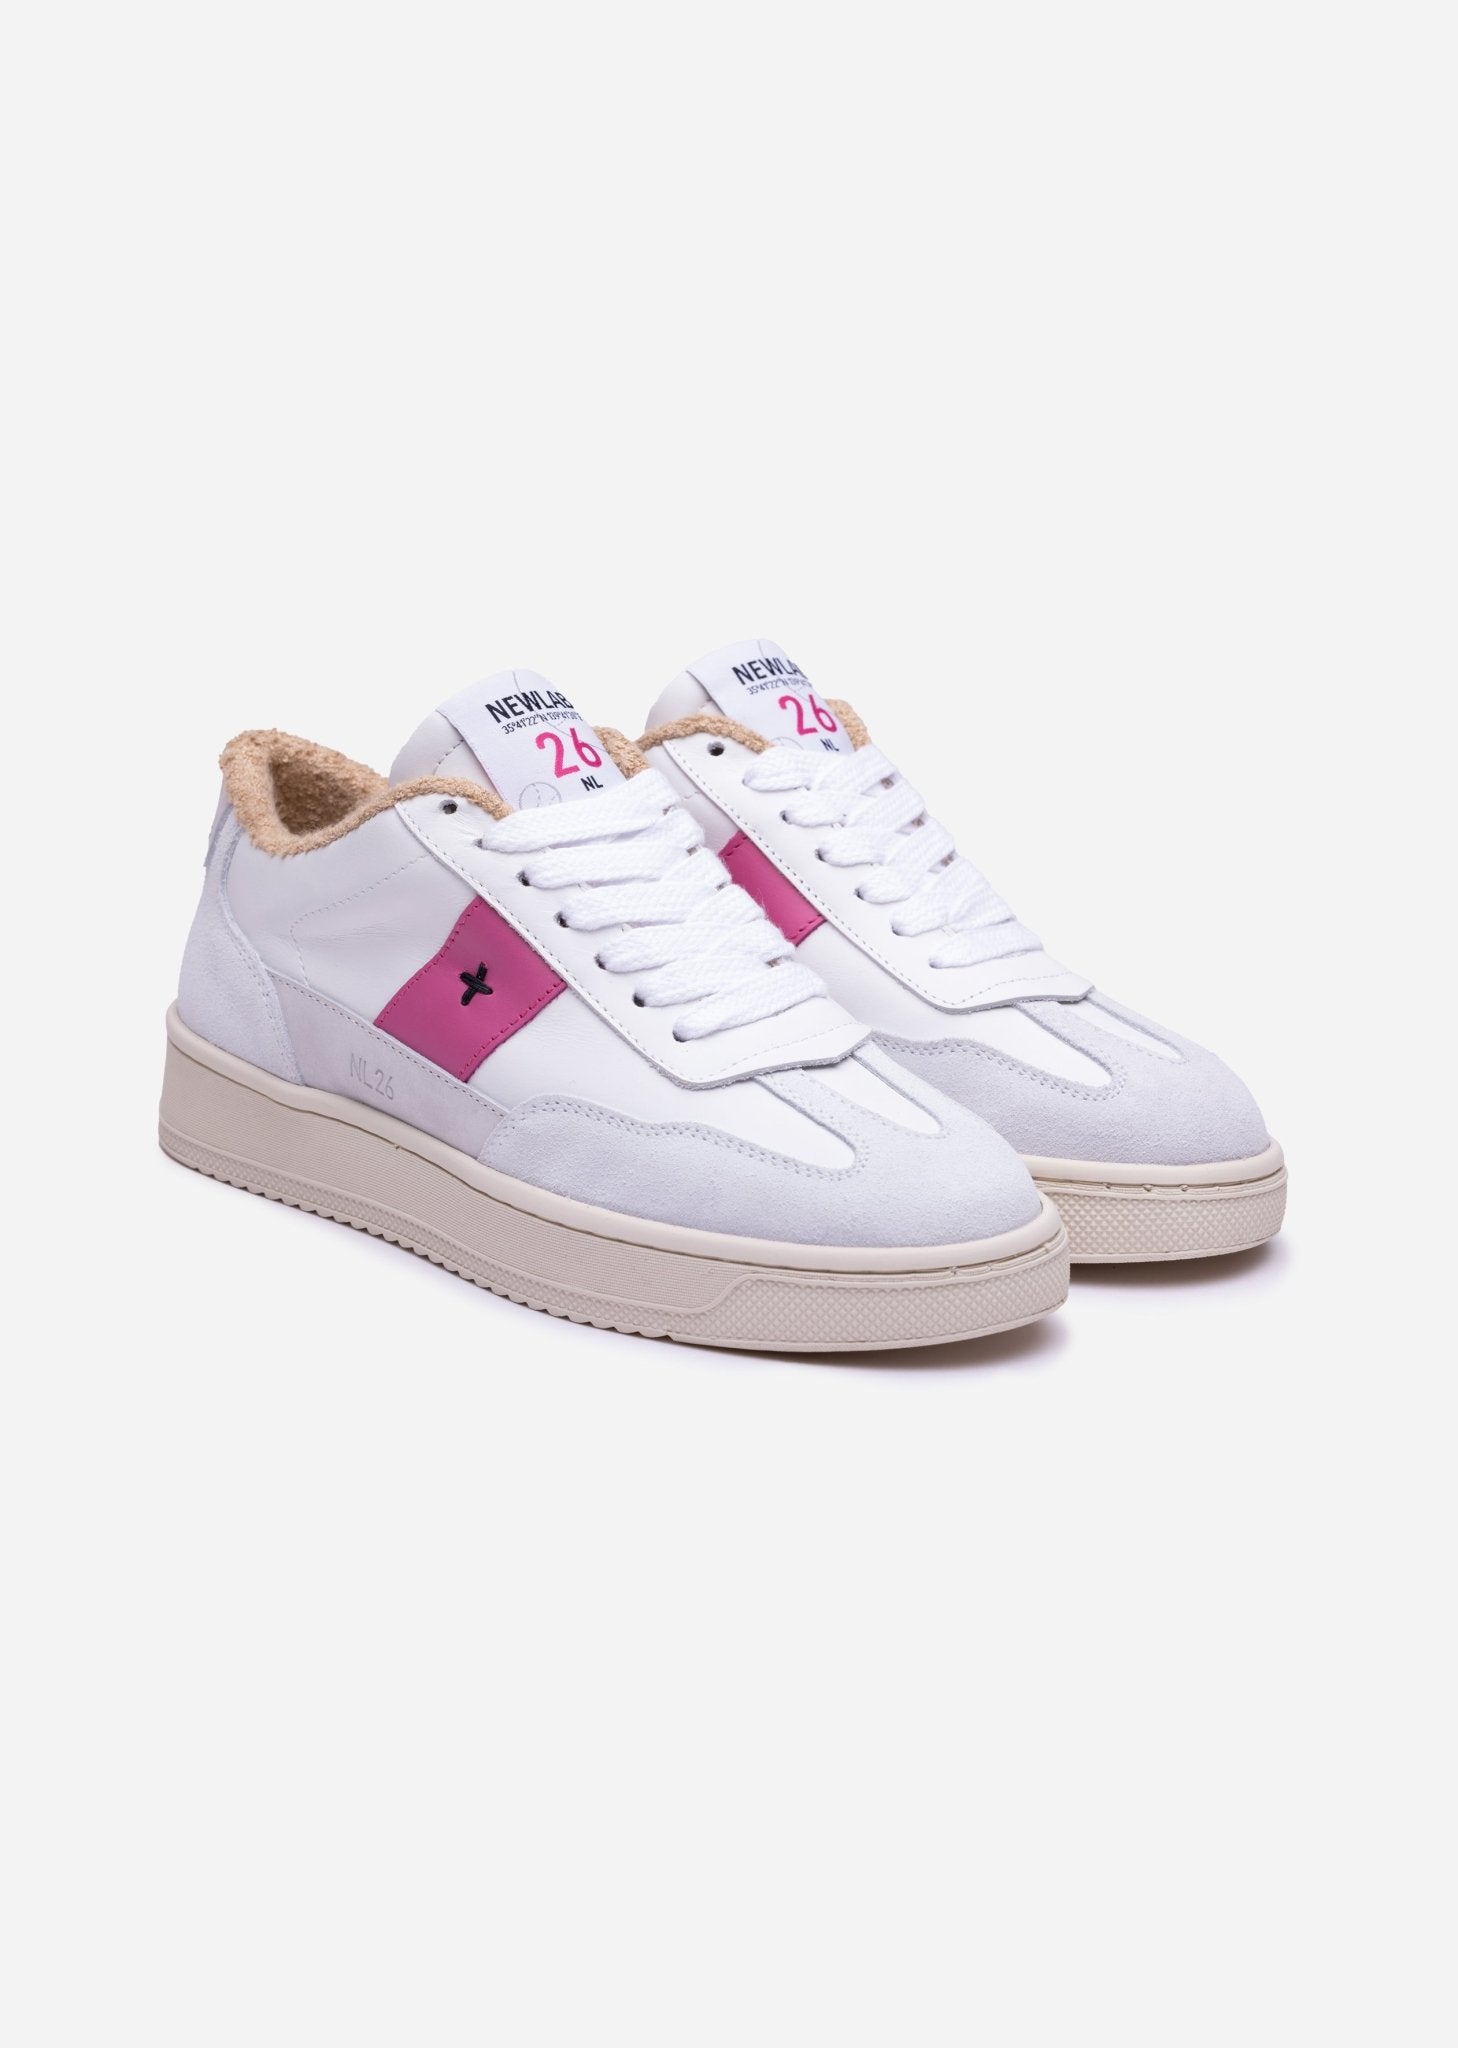 NL26 White/Pink - NEWLAB - Chaussures - NEWLAB